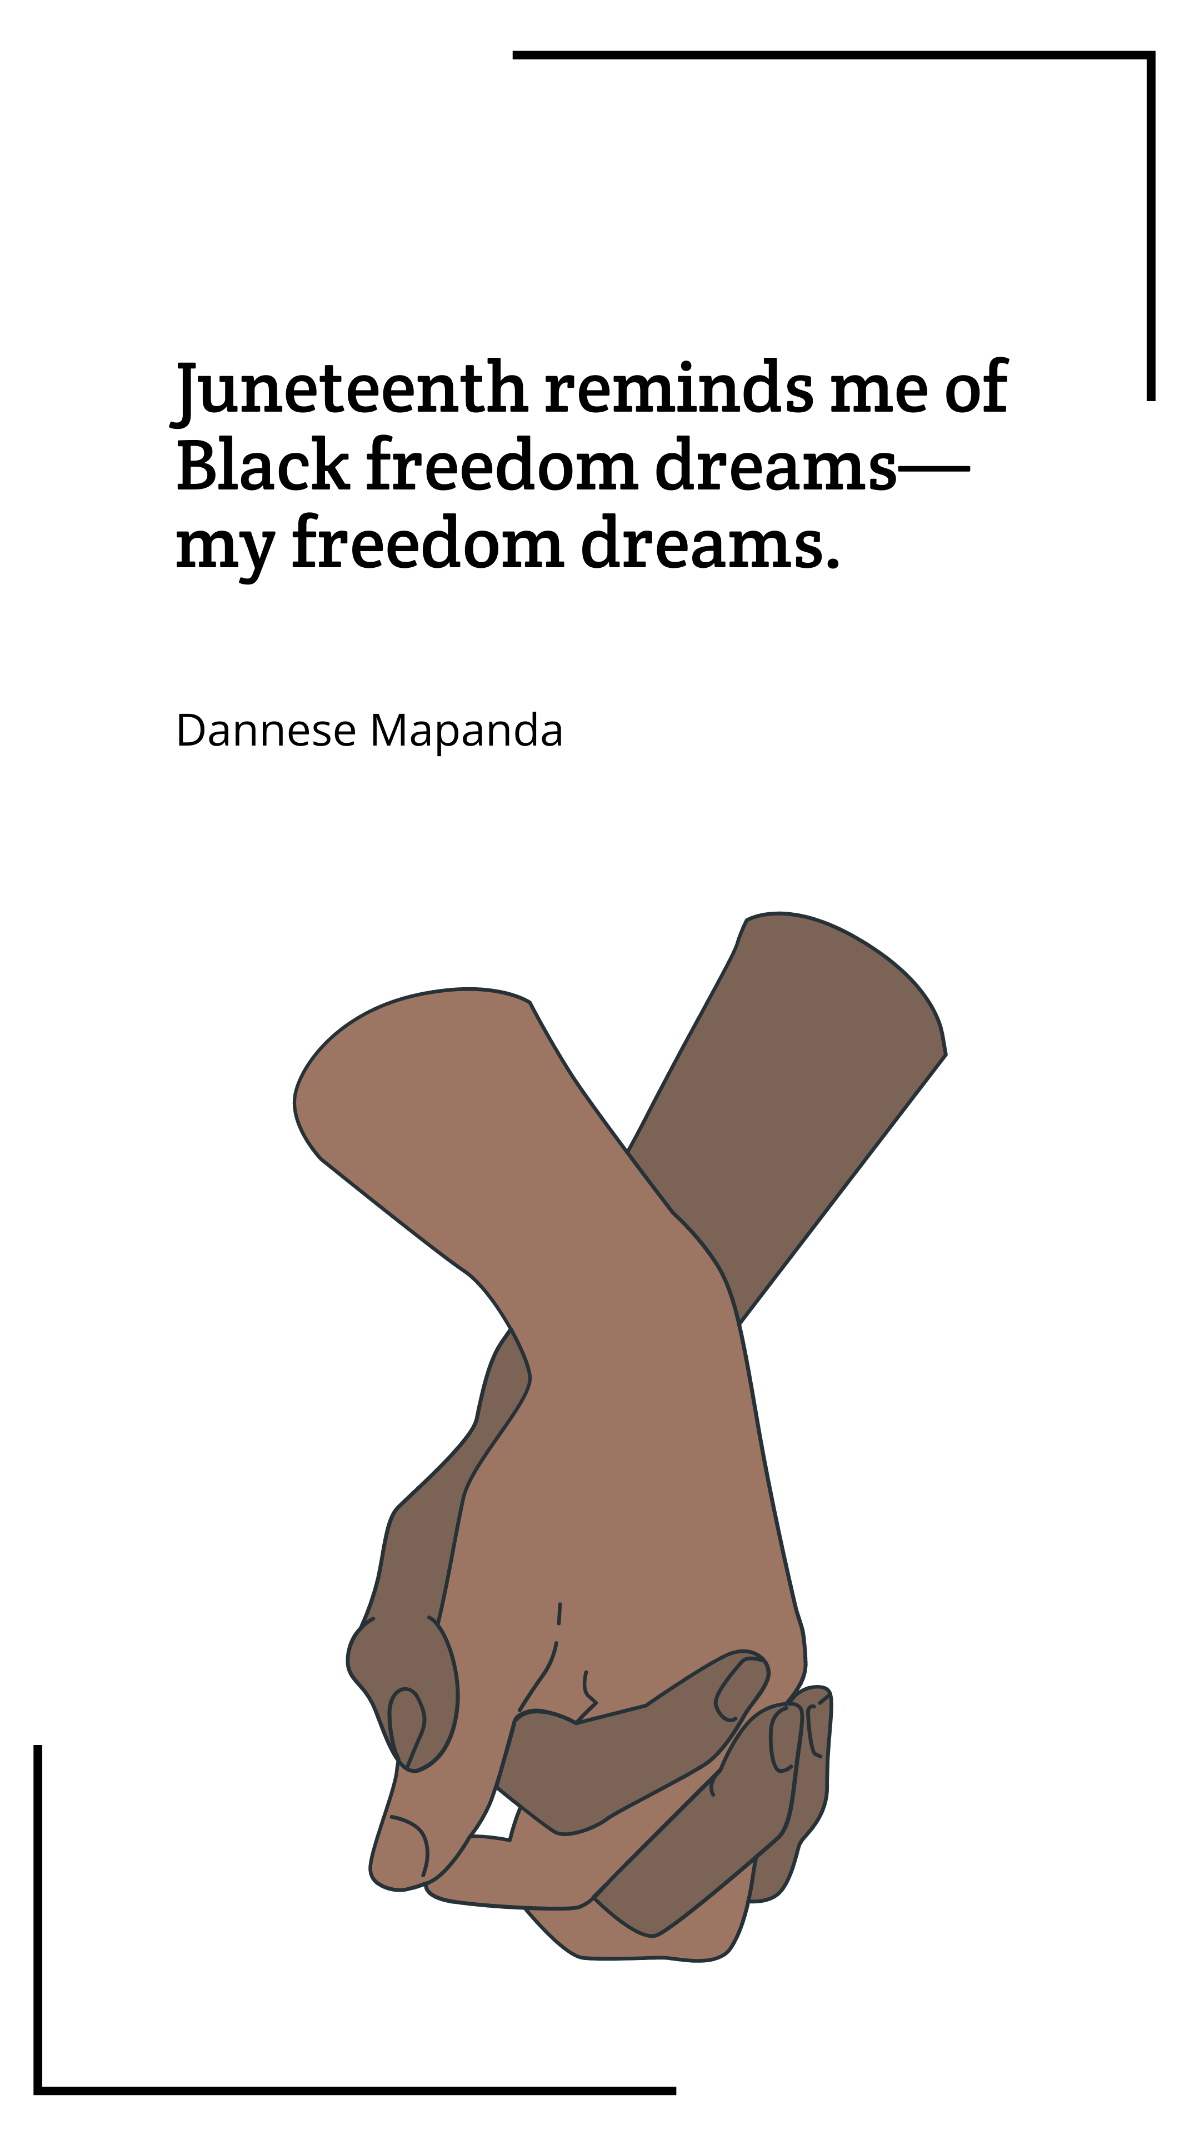 Dannese Mapanda - Juneteenth reminds me of Black freedom dreams—my freedom dreams.